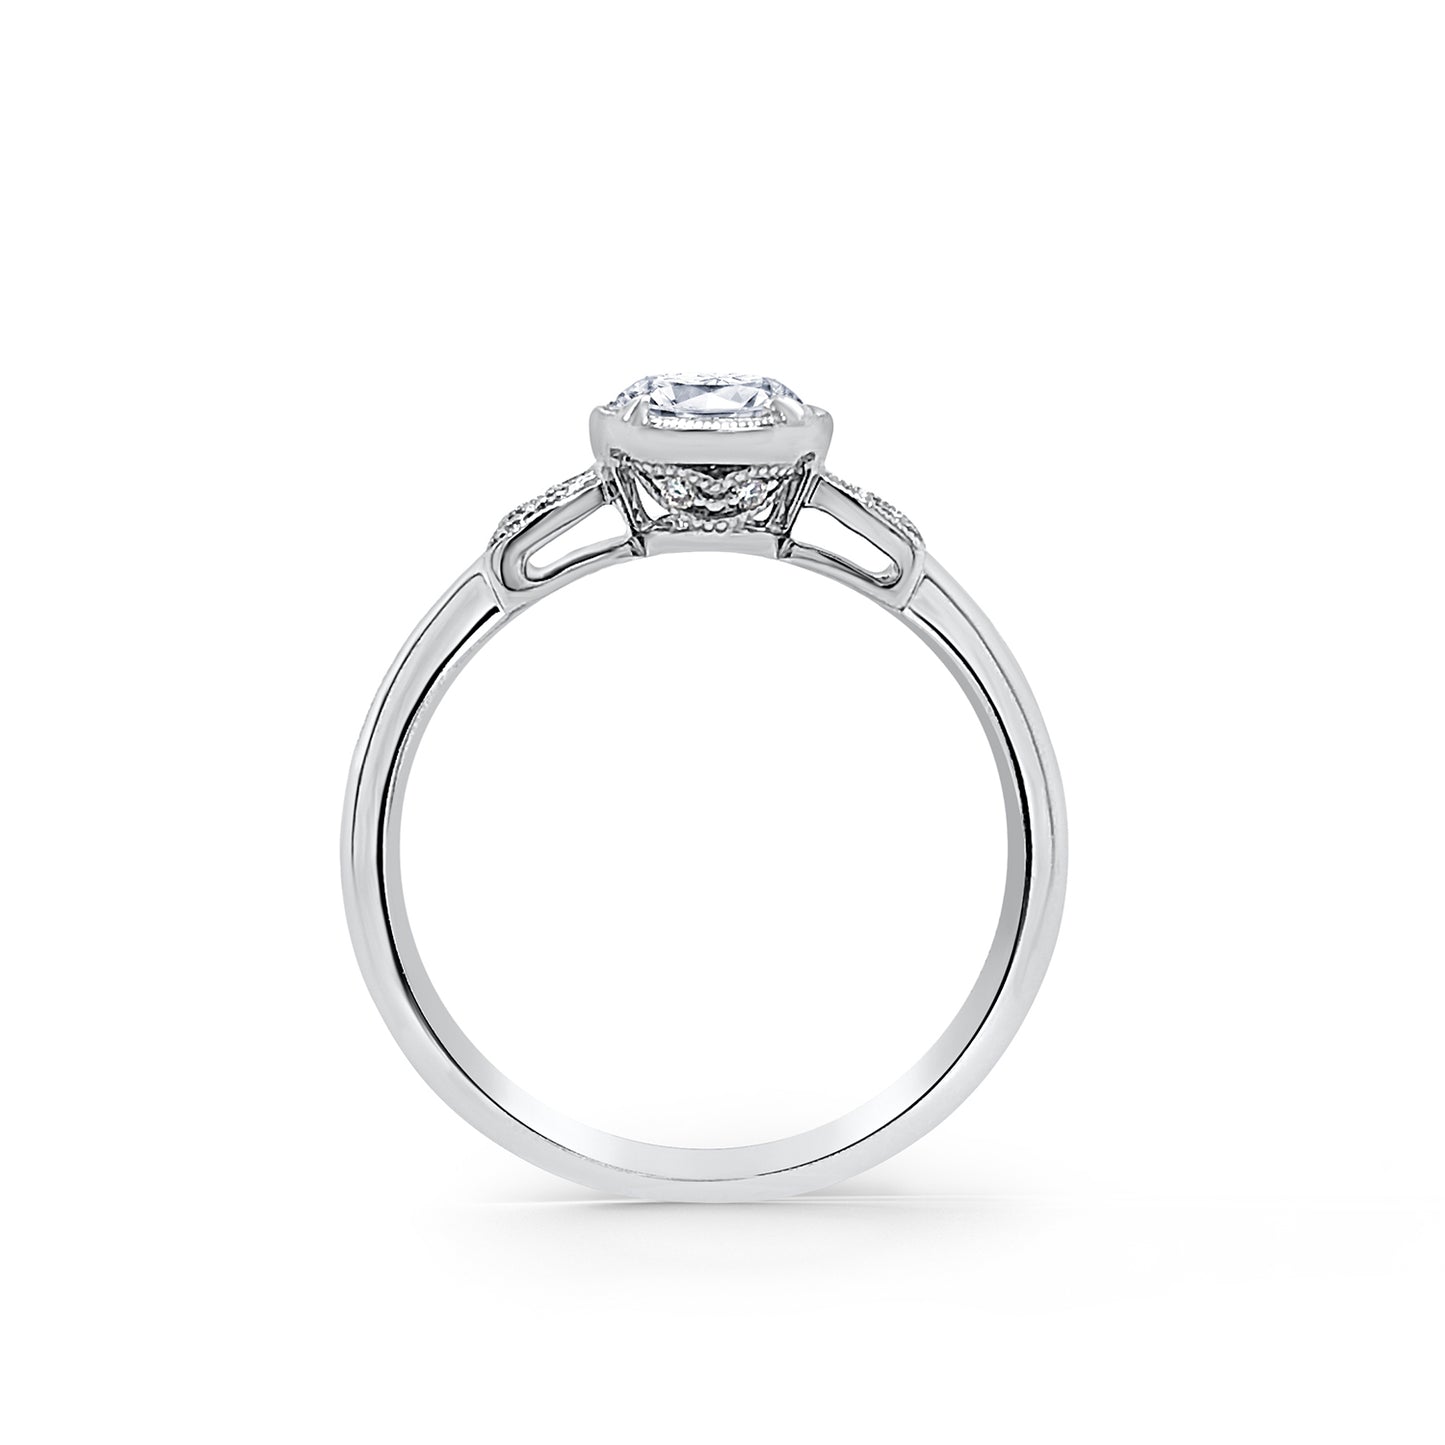 Floral Pavé Diamond Engagement Ring